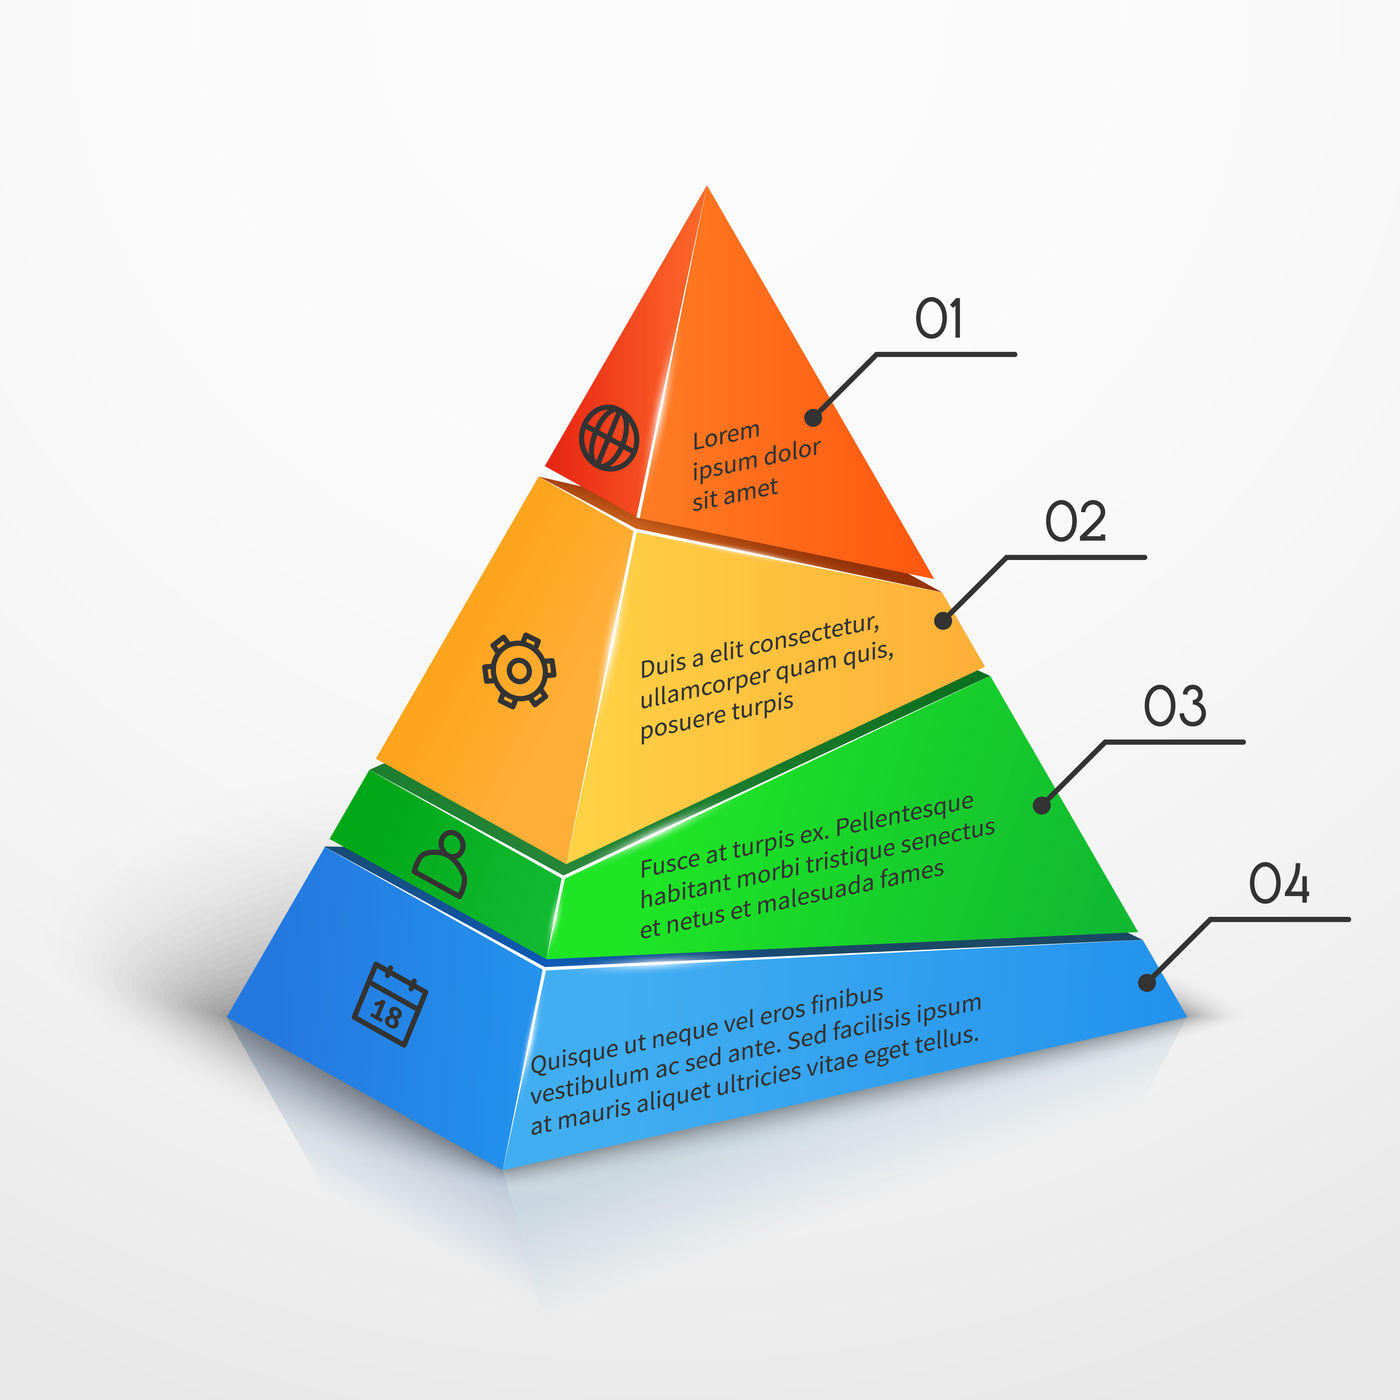 Pyramid Hierarchy Template